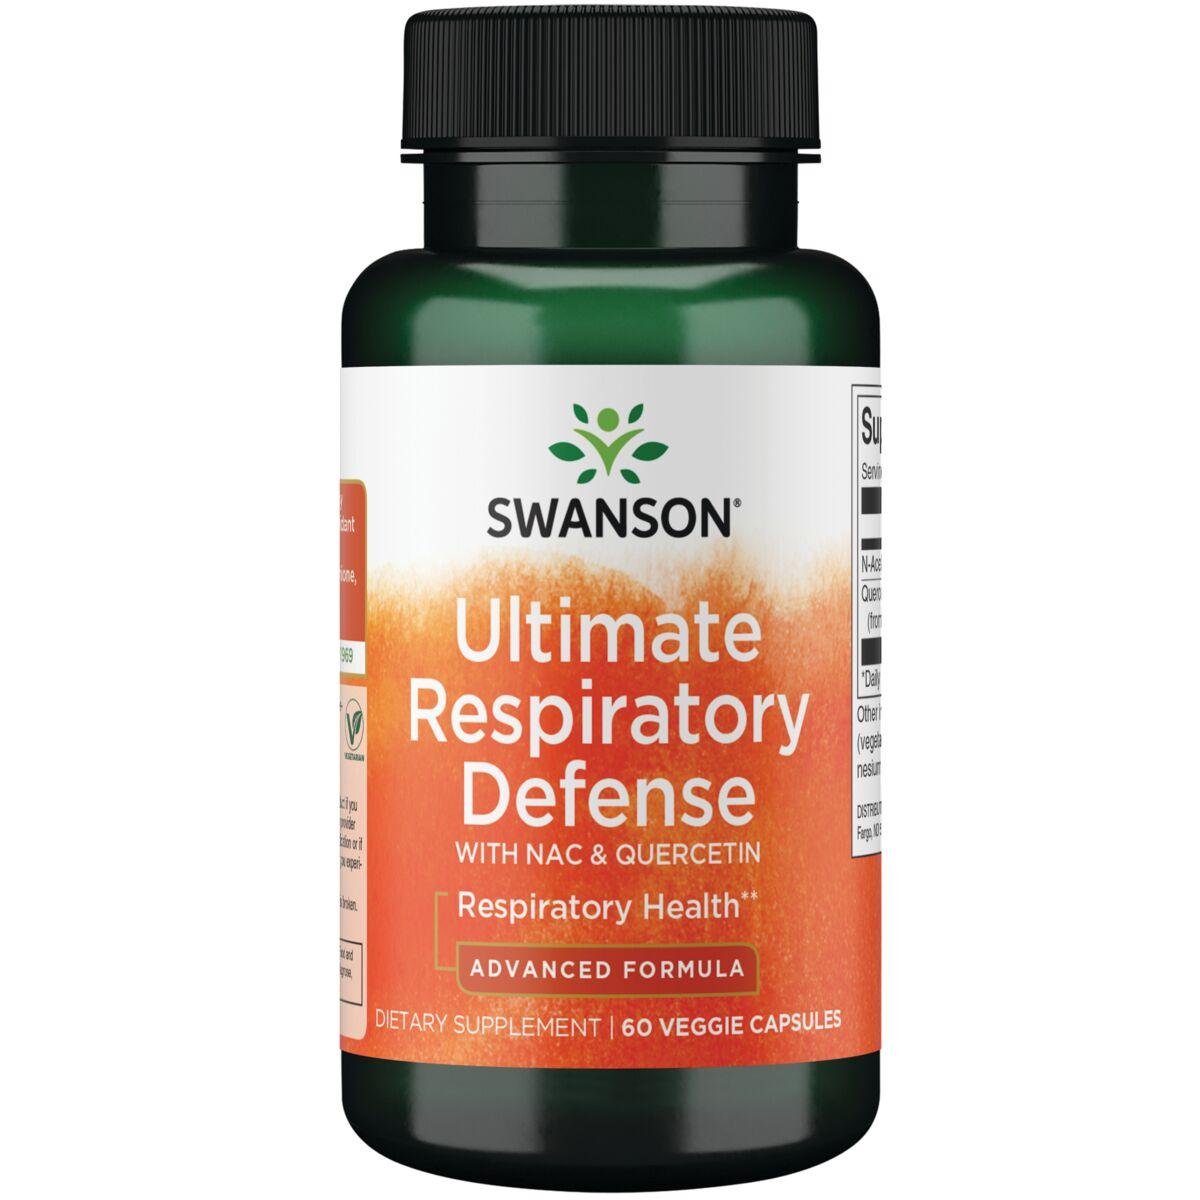 Swanson Premium Ultimate Respiratory Defense with Nac and Quercetin 60 Veg Caps Respiratory Health